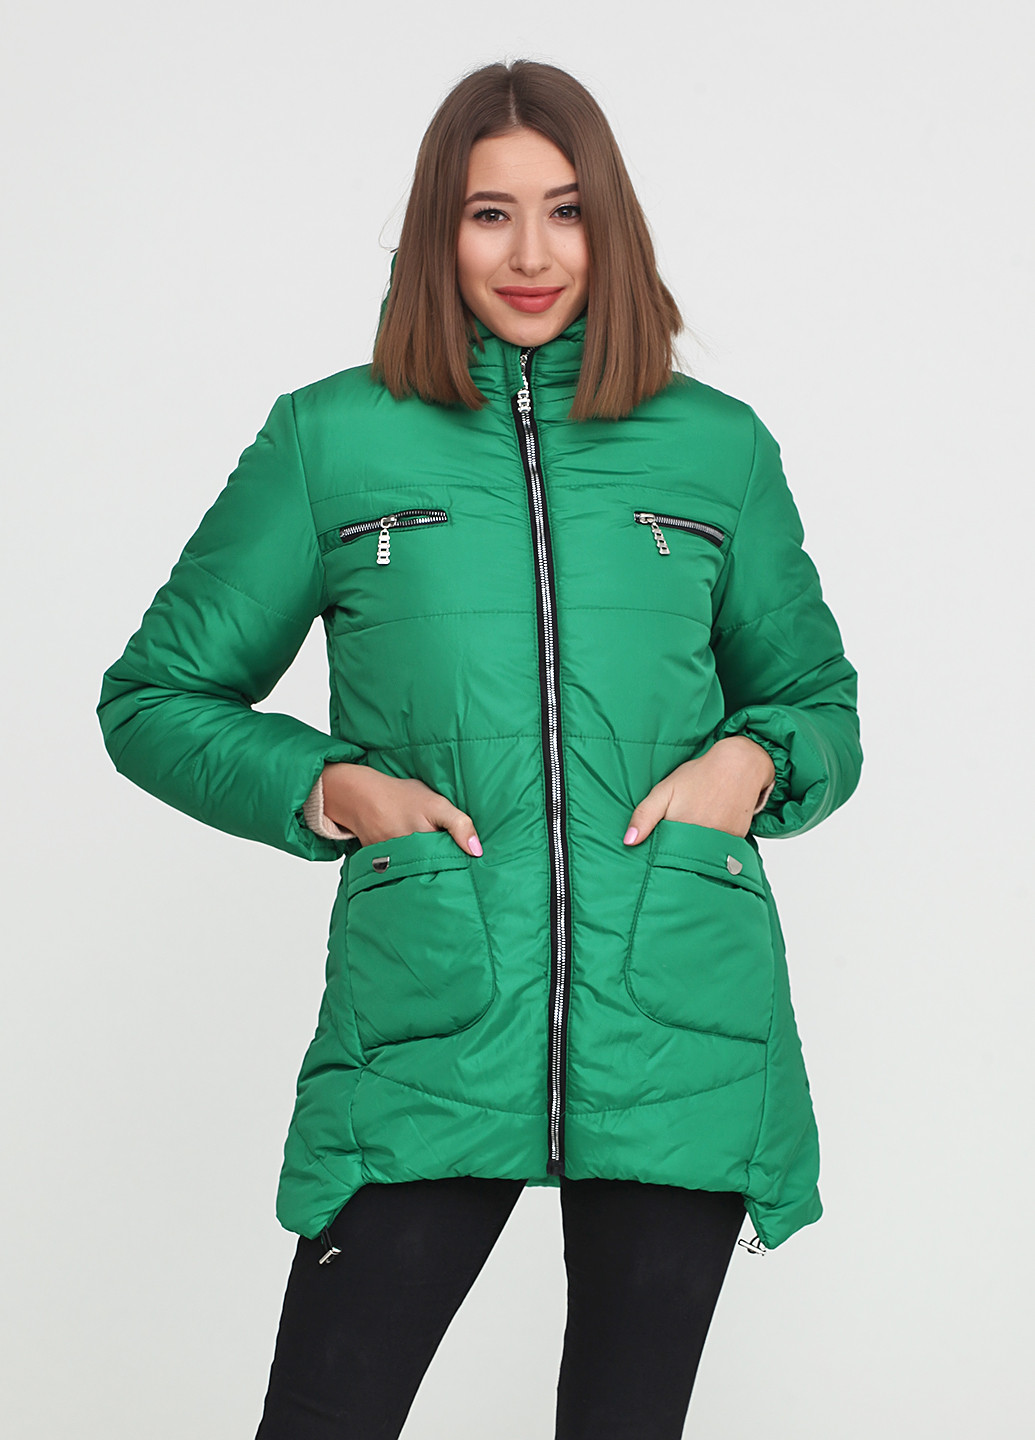 Зеленая зимняя куртка Ellis